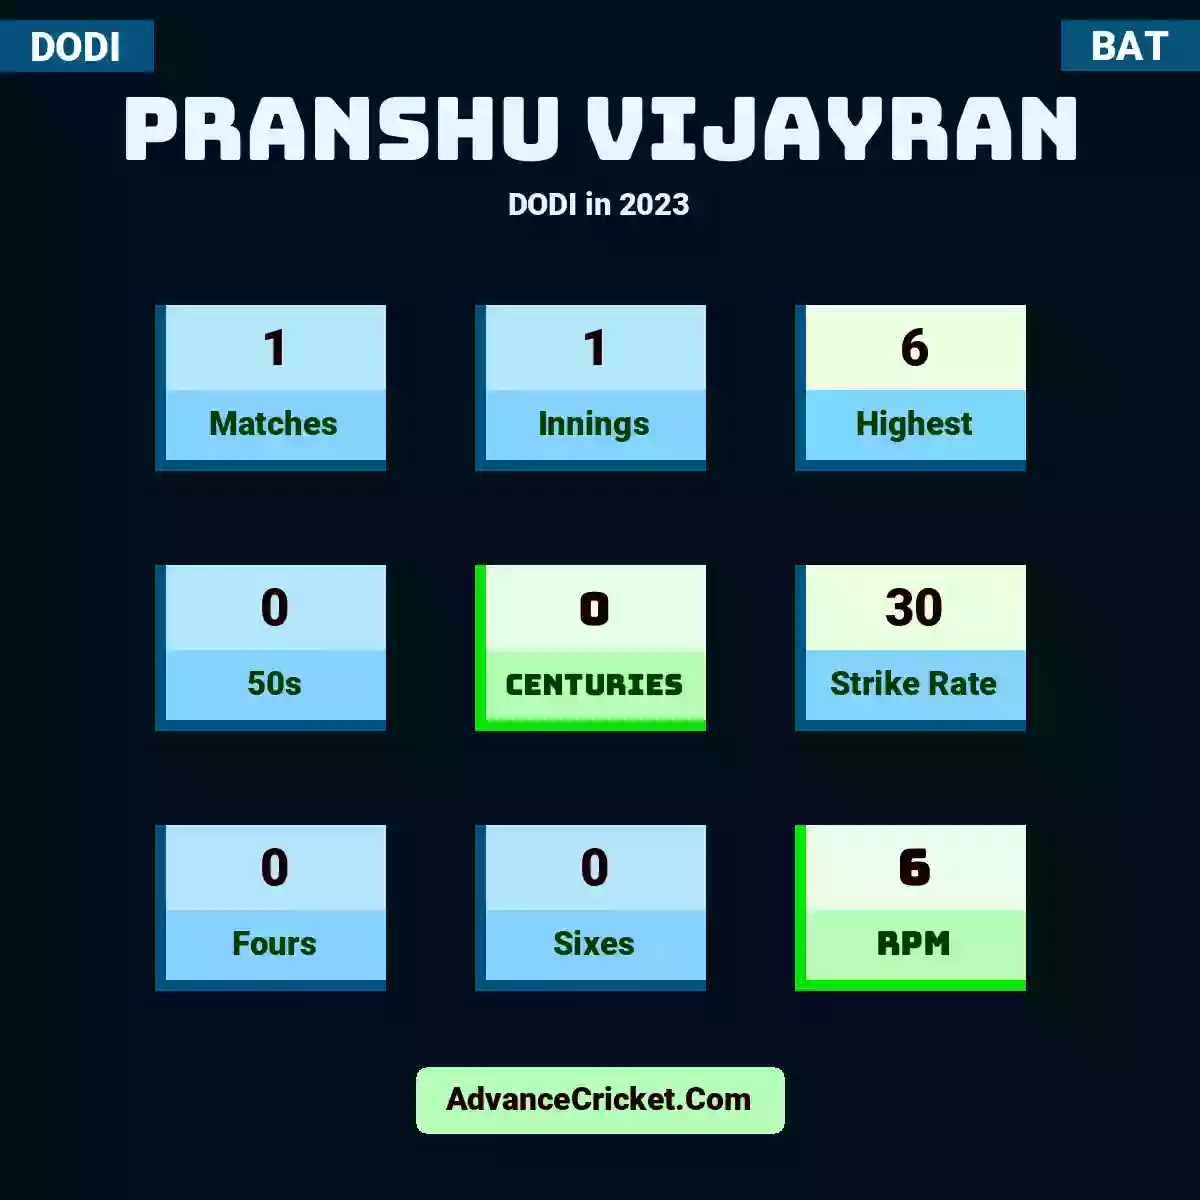 Pranshu Vijayran DODI  in 2023, Pranshu Vijayran played 1 matches, scored 6 runs as highest, 0 half-centuries, and 0 centuries, with a strike rate of 30. P.Vijayran hit 0 fours and 0 sixes, with an RPM of 6.